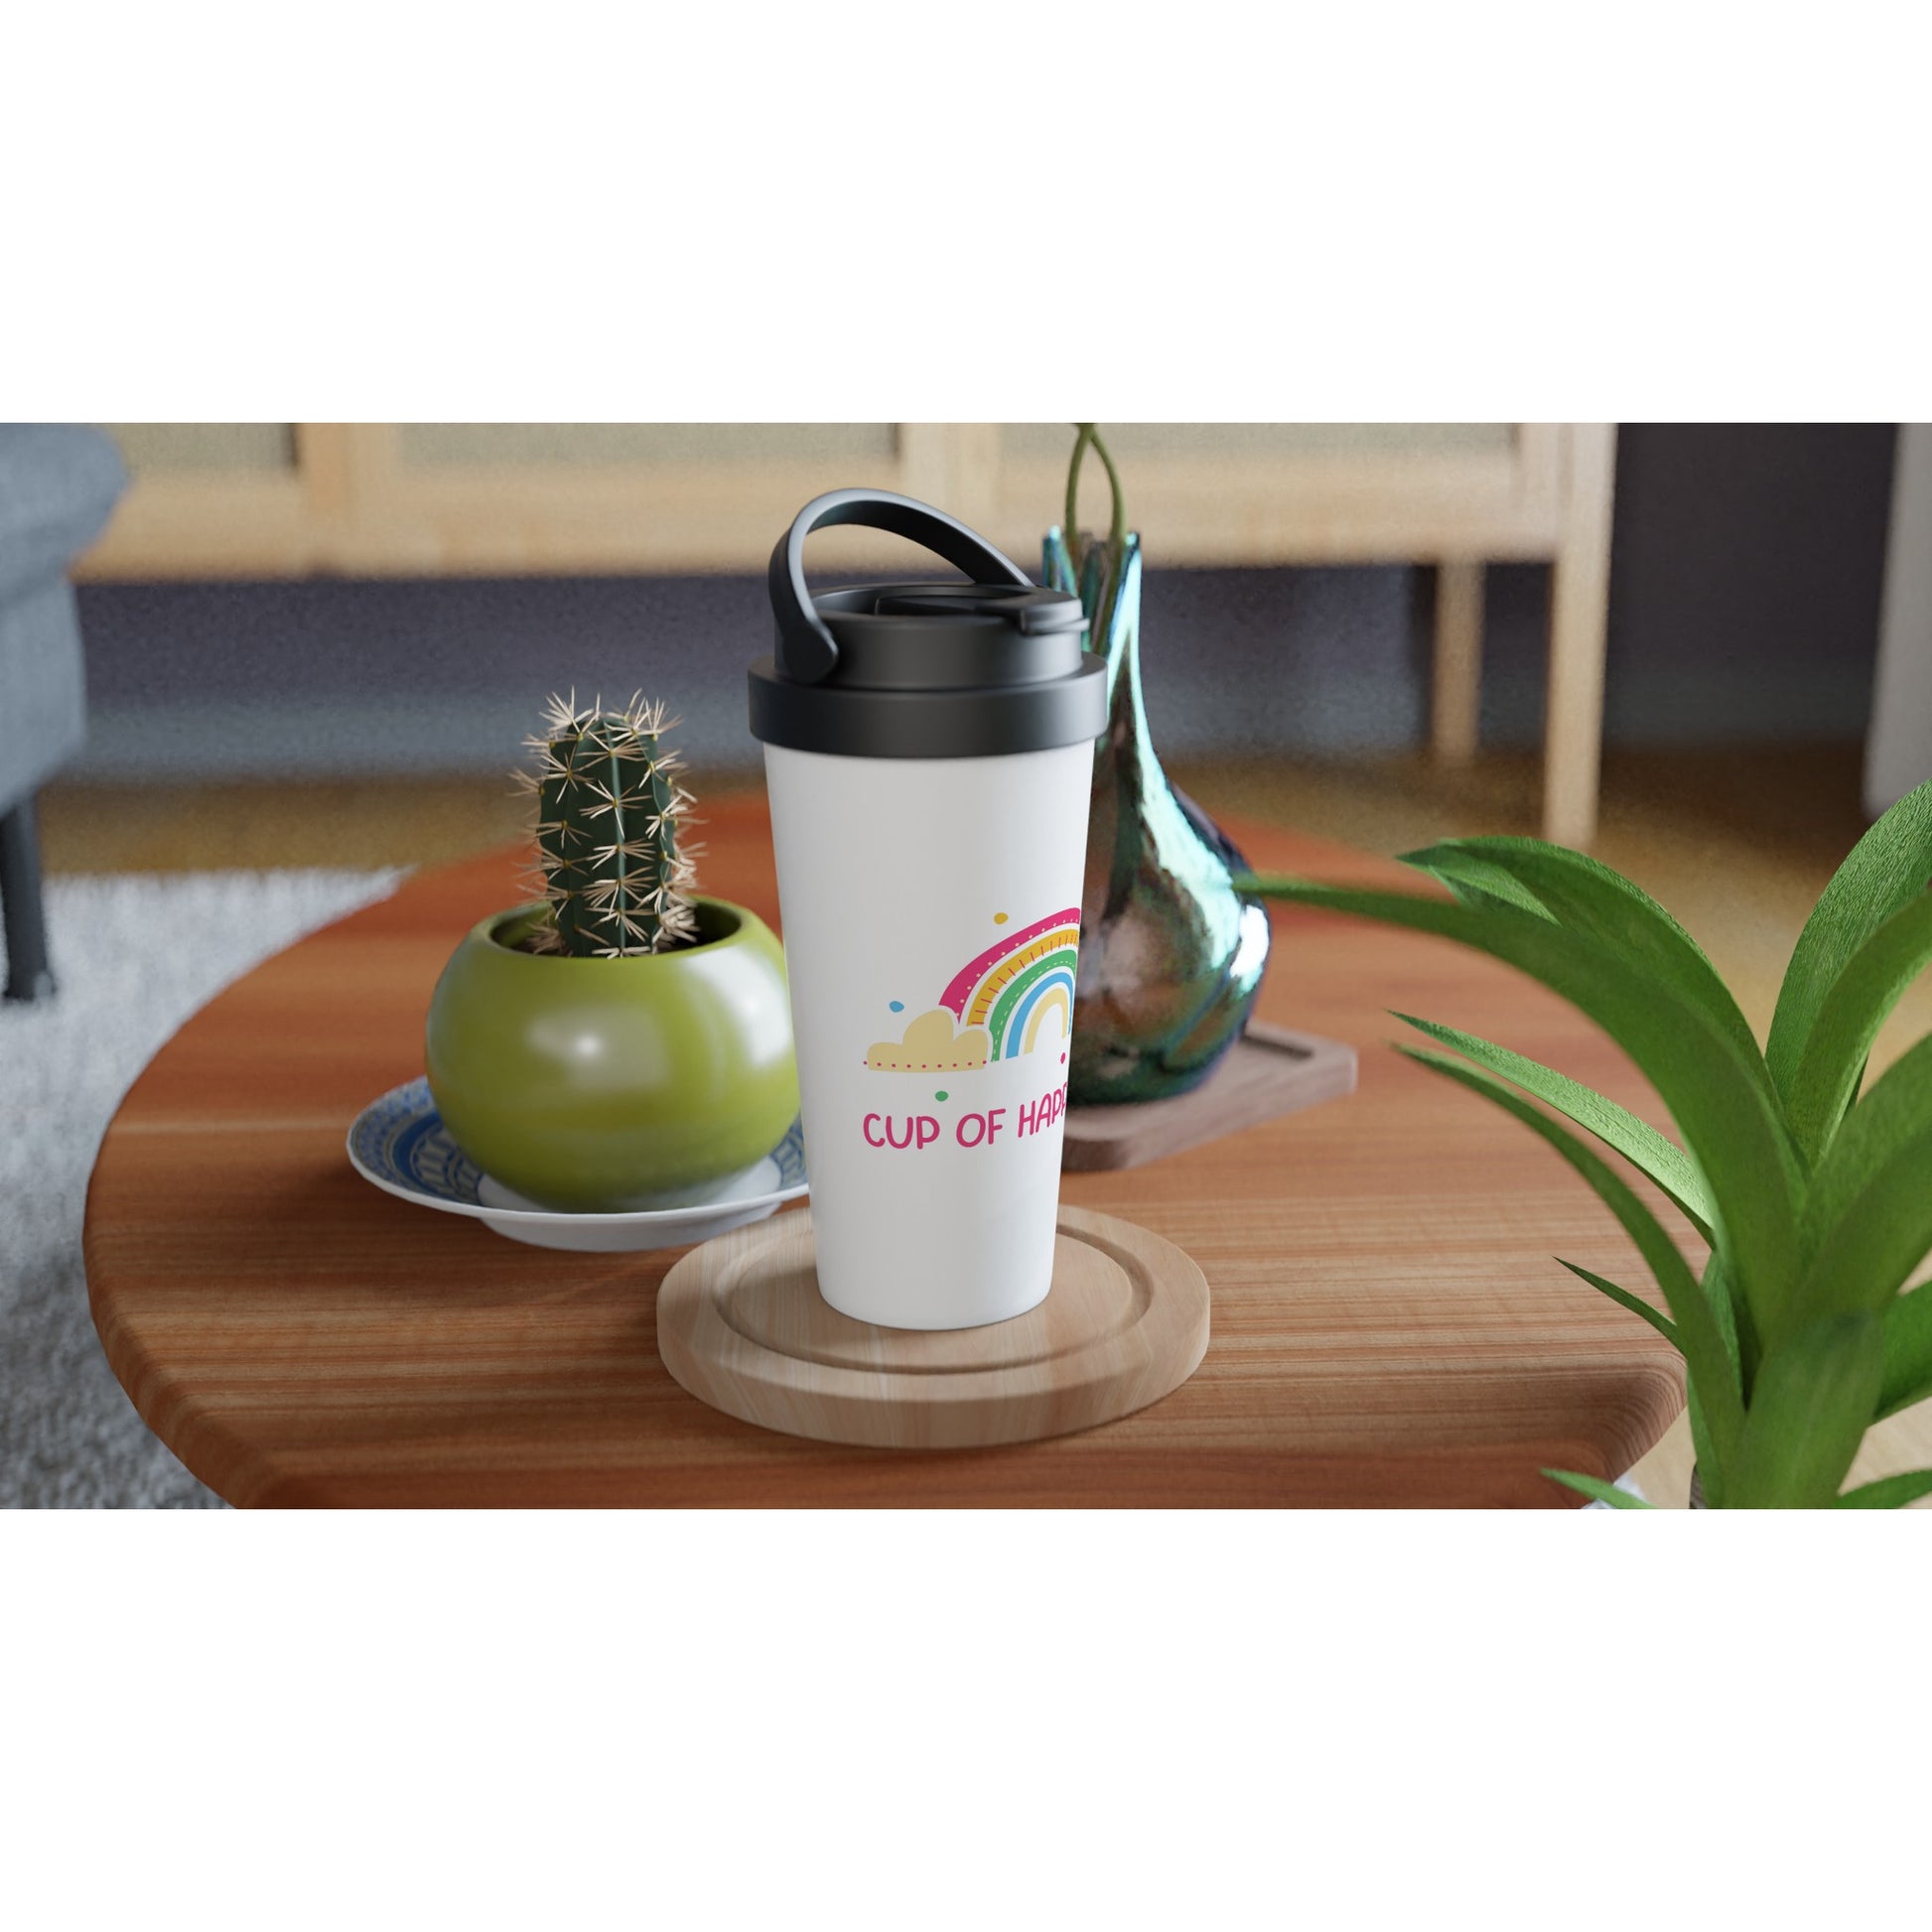 Cup Of Happiness, Rainbow - White 15oz Stainless Steel Travel Mug Travel Mug Coffee Positivity